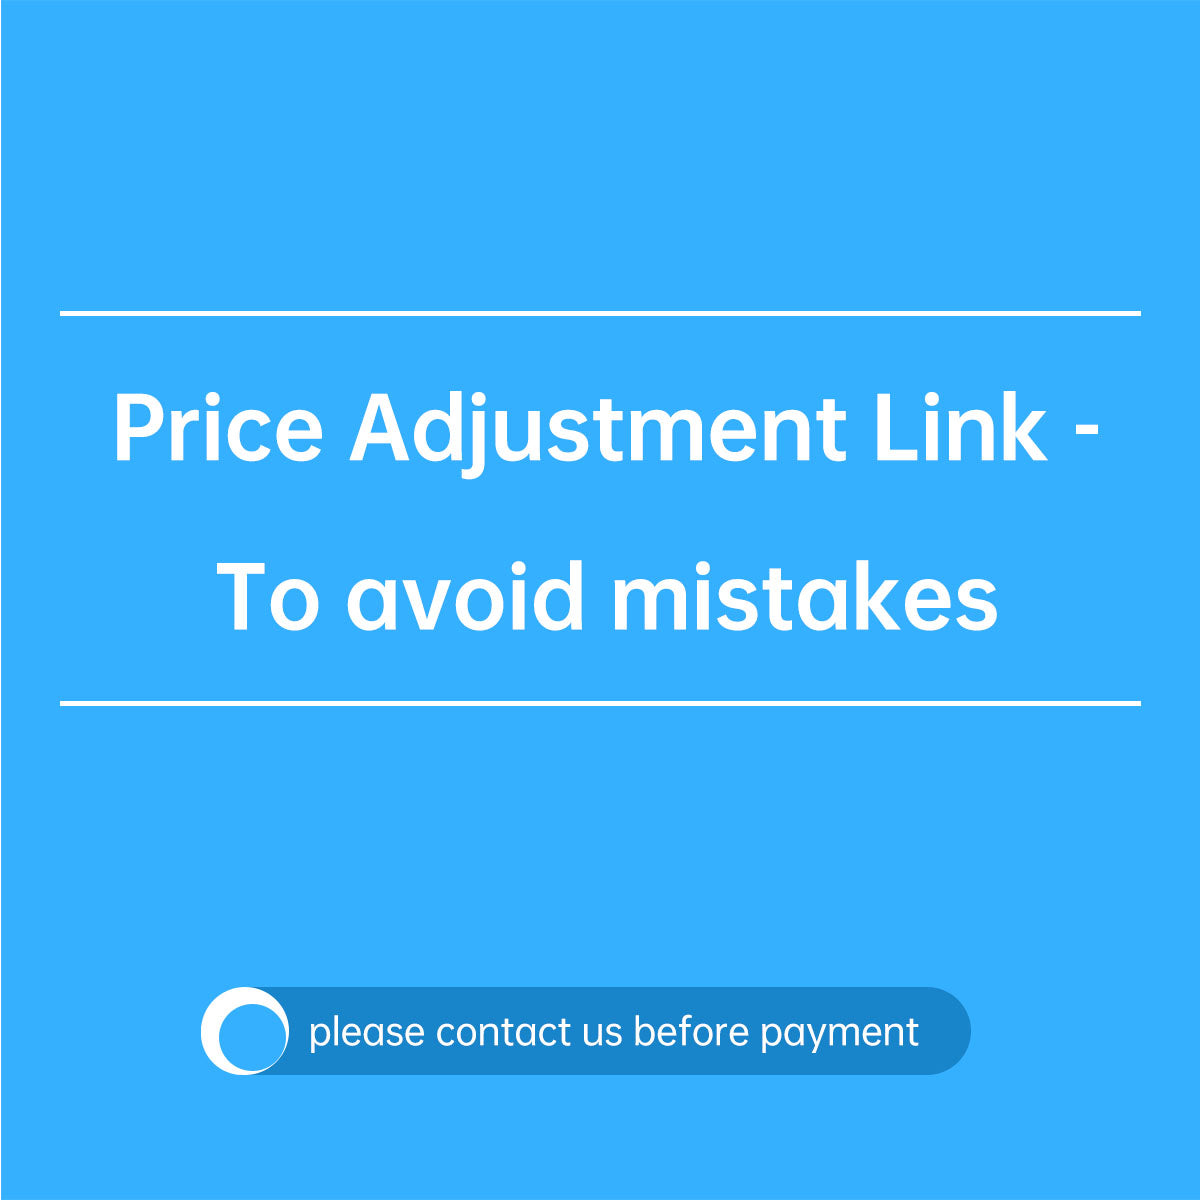 SMONET Price Adjustment Link, To avoid mistakes